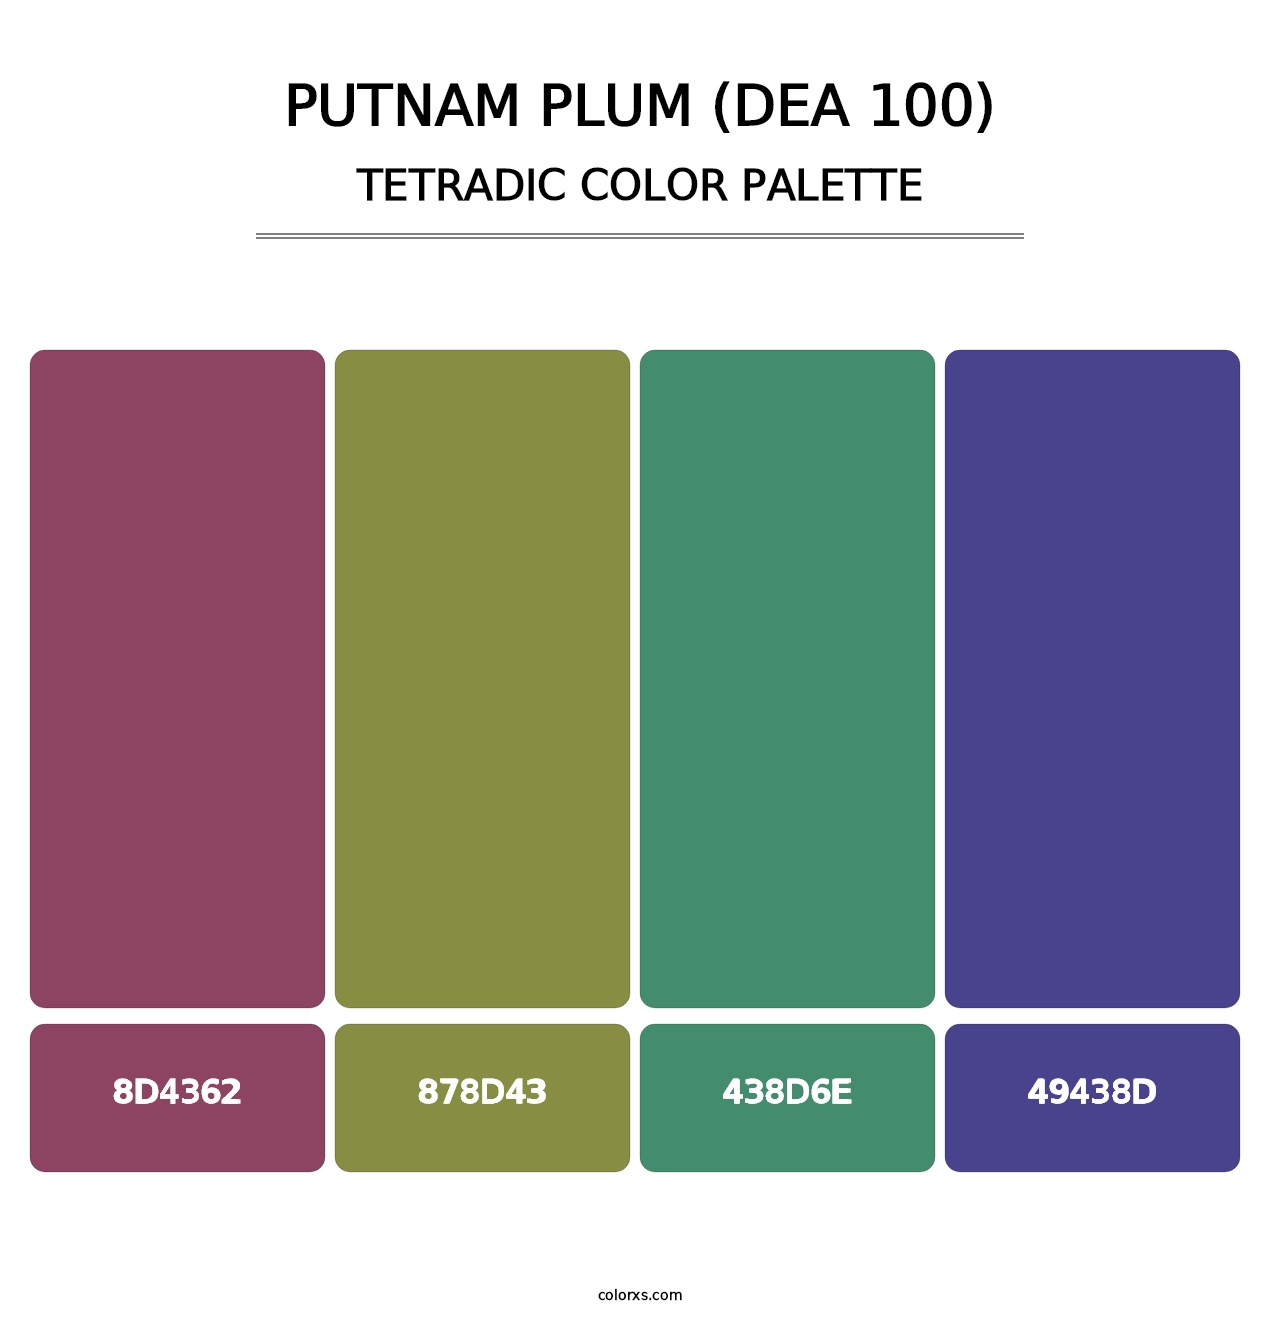 Putnam Plum (DEA 100) - Tetradic Color Palette